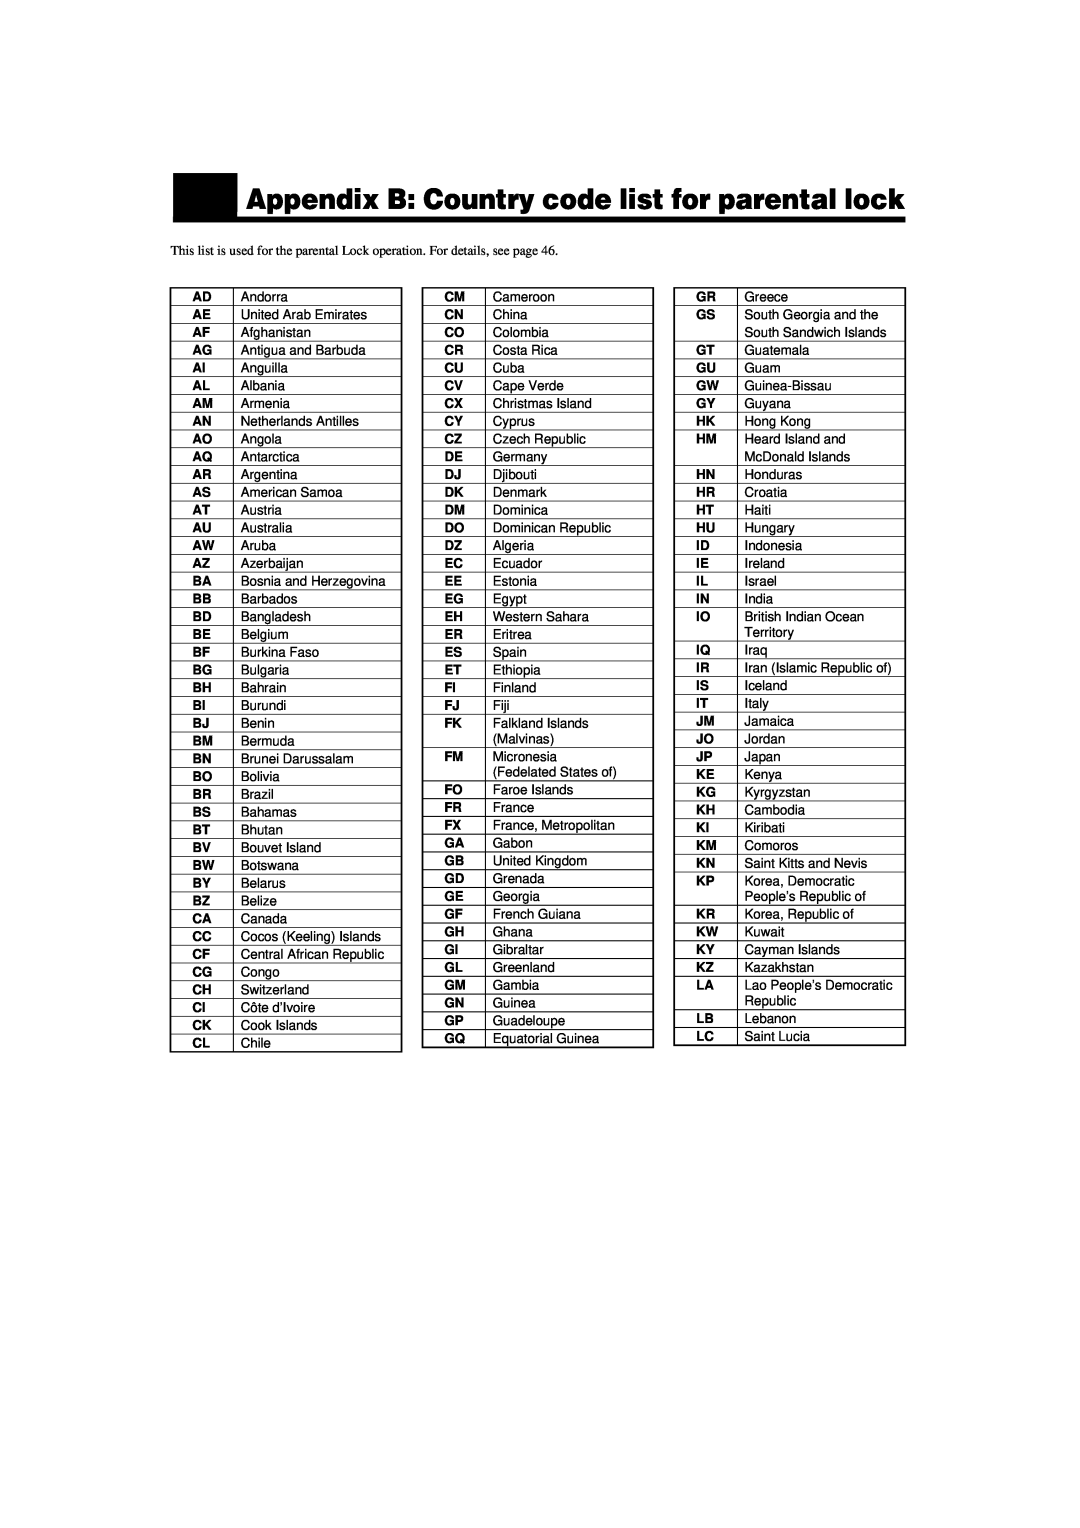 JVC TH-A9 manual Appendix B Country code list for parental lock, English English English English English English 